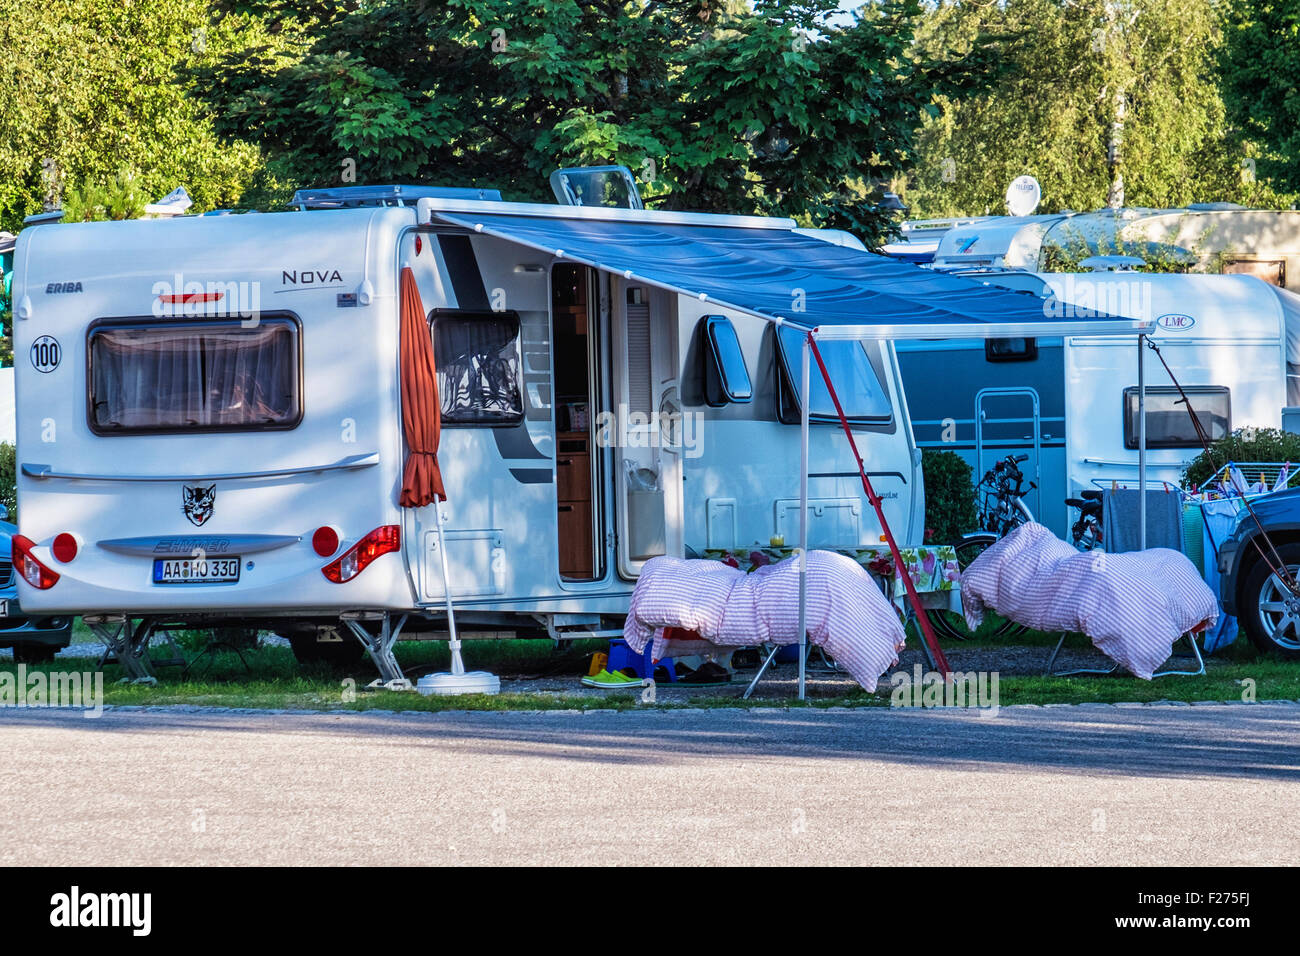 Forggensee lake caravan park with two campers in sleeping bags sleeping outside, Bavaria Germany Stock Photo